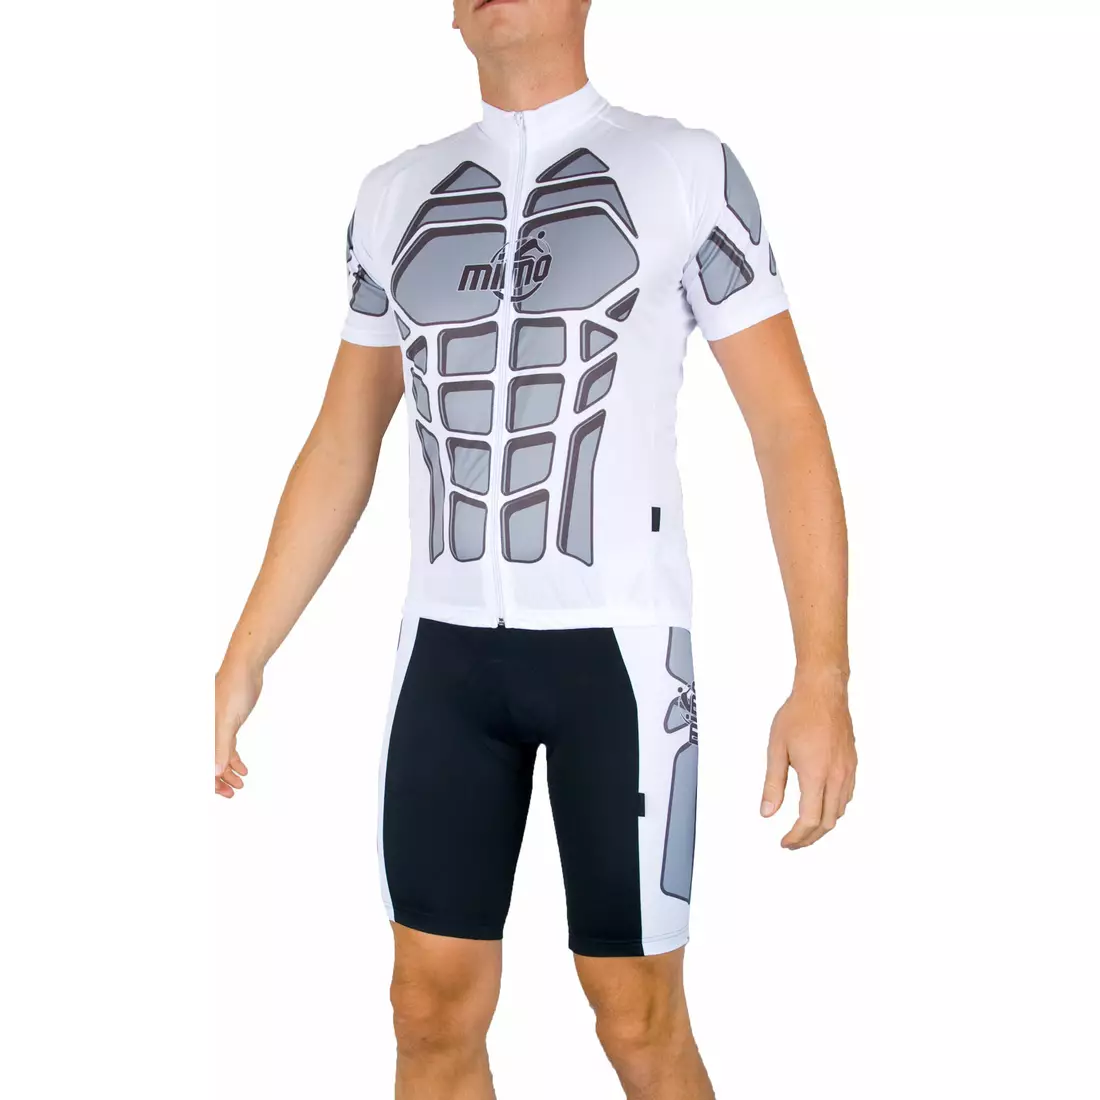 MikeSPORT DESIGN BODY kerékpáros rövidnadrág, fehér